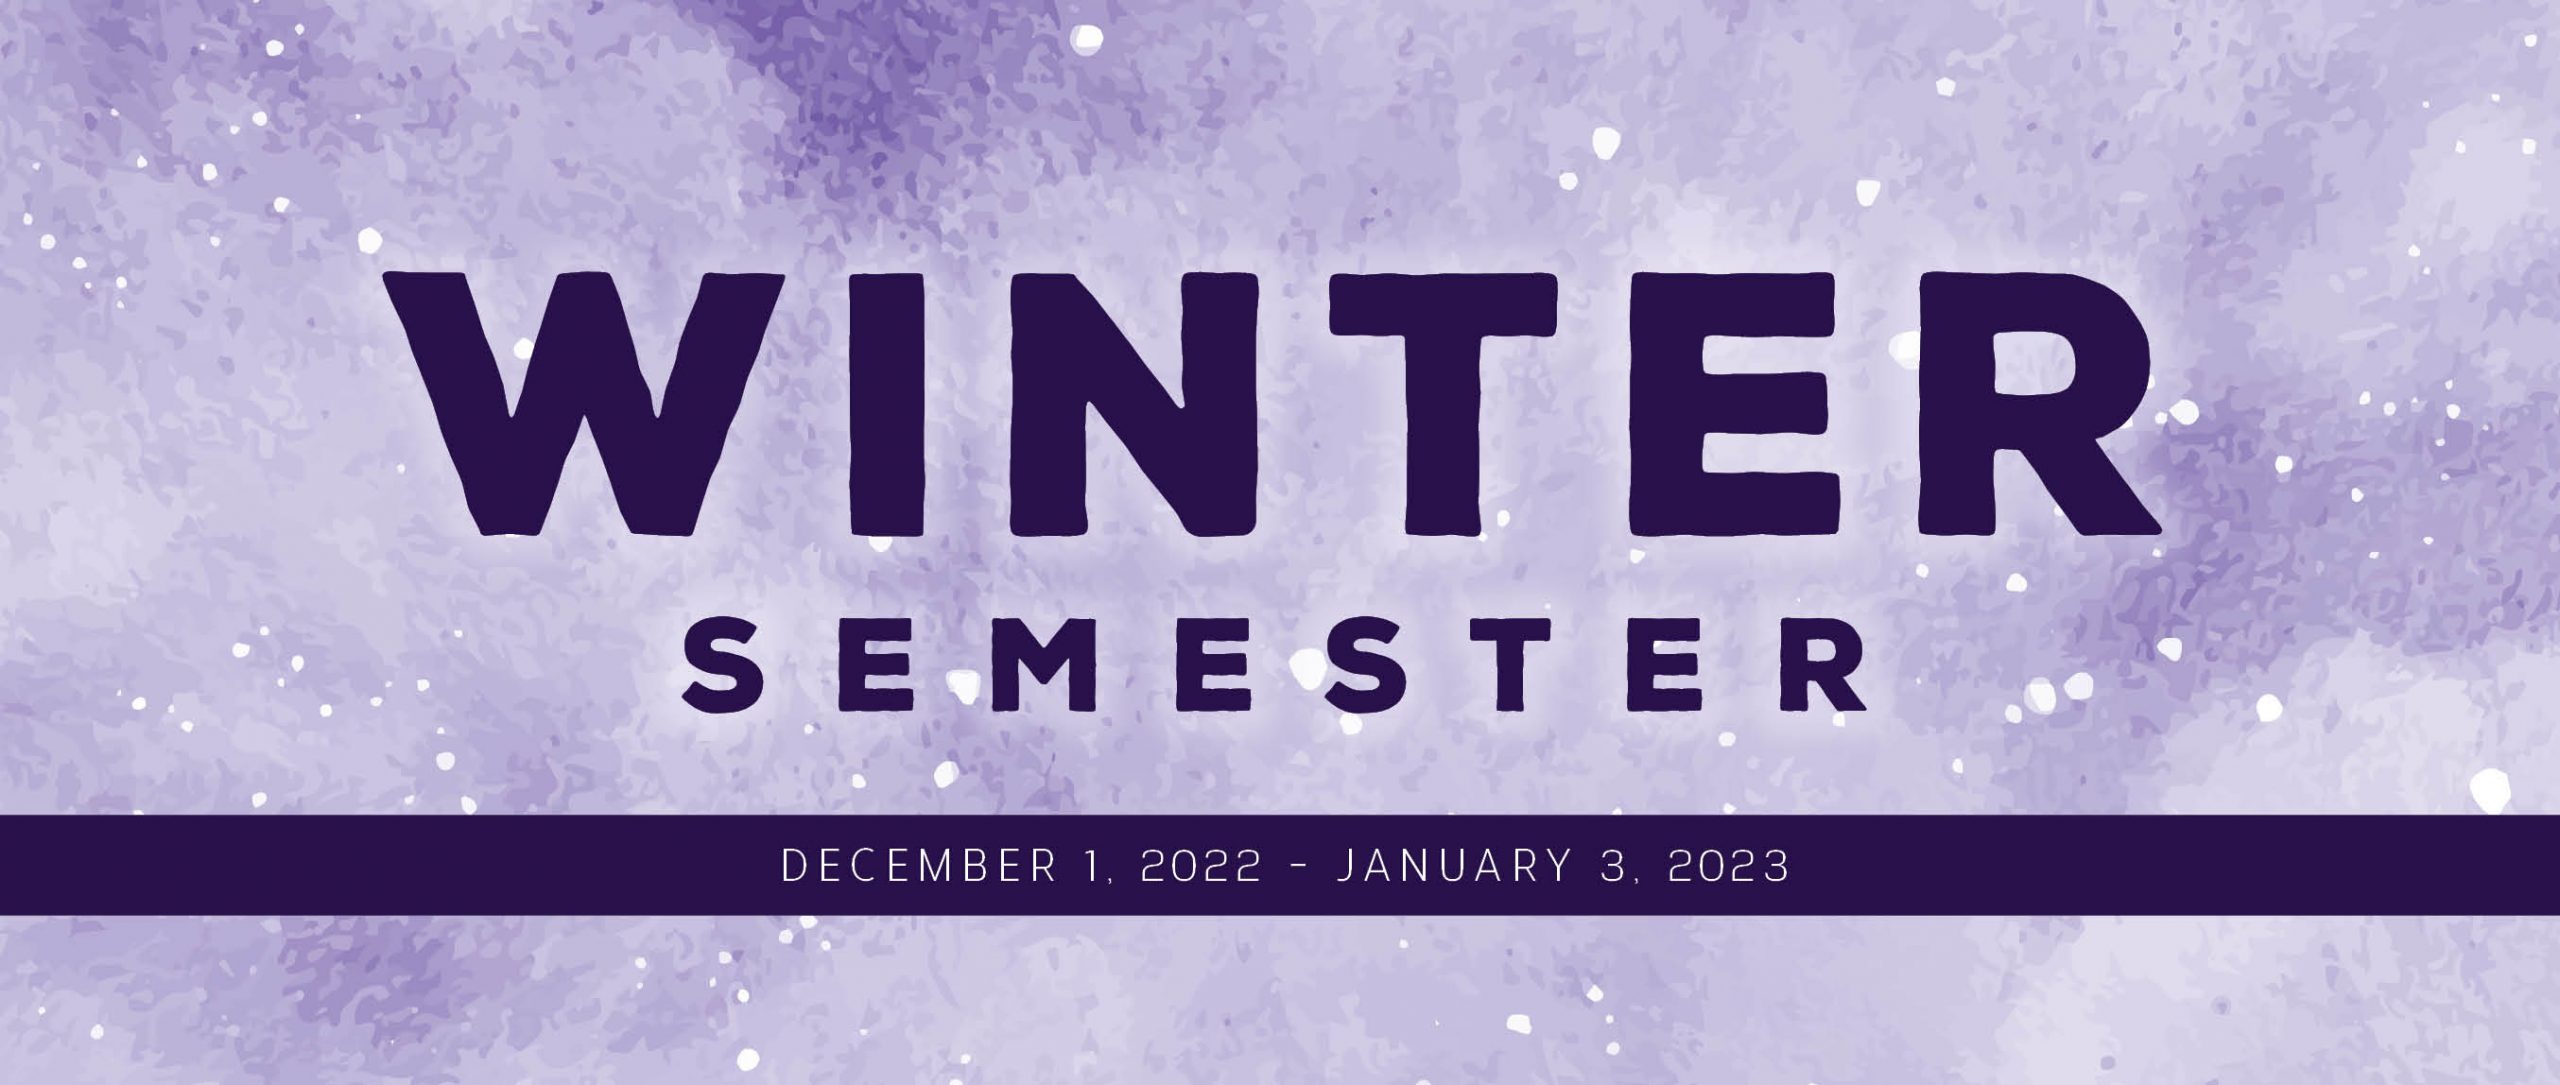 Winter Semester, December 1, 2022 - January 3, 2023